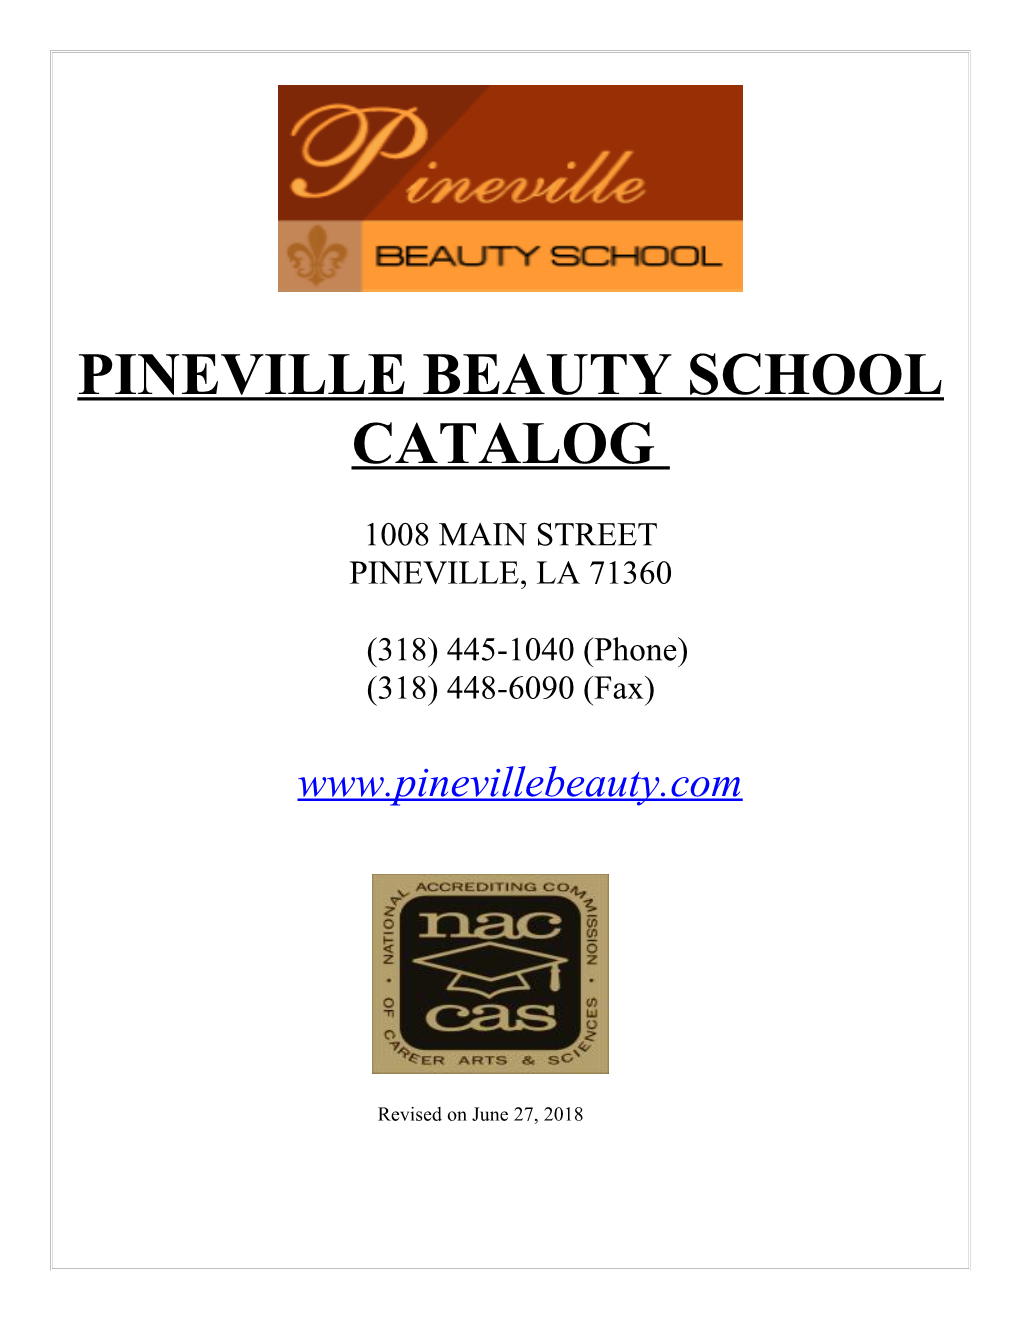 Pineville Beauty School Catalog